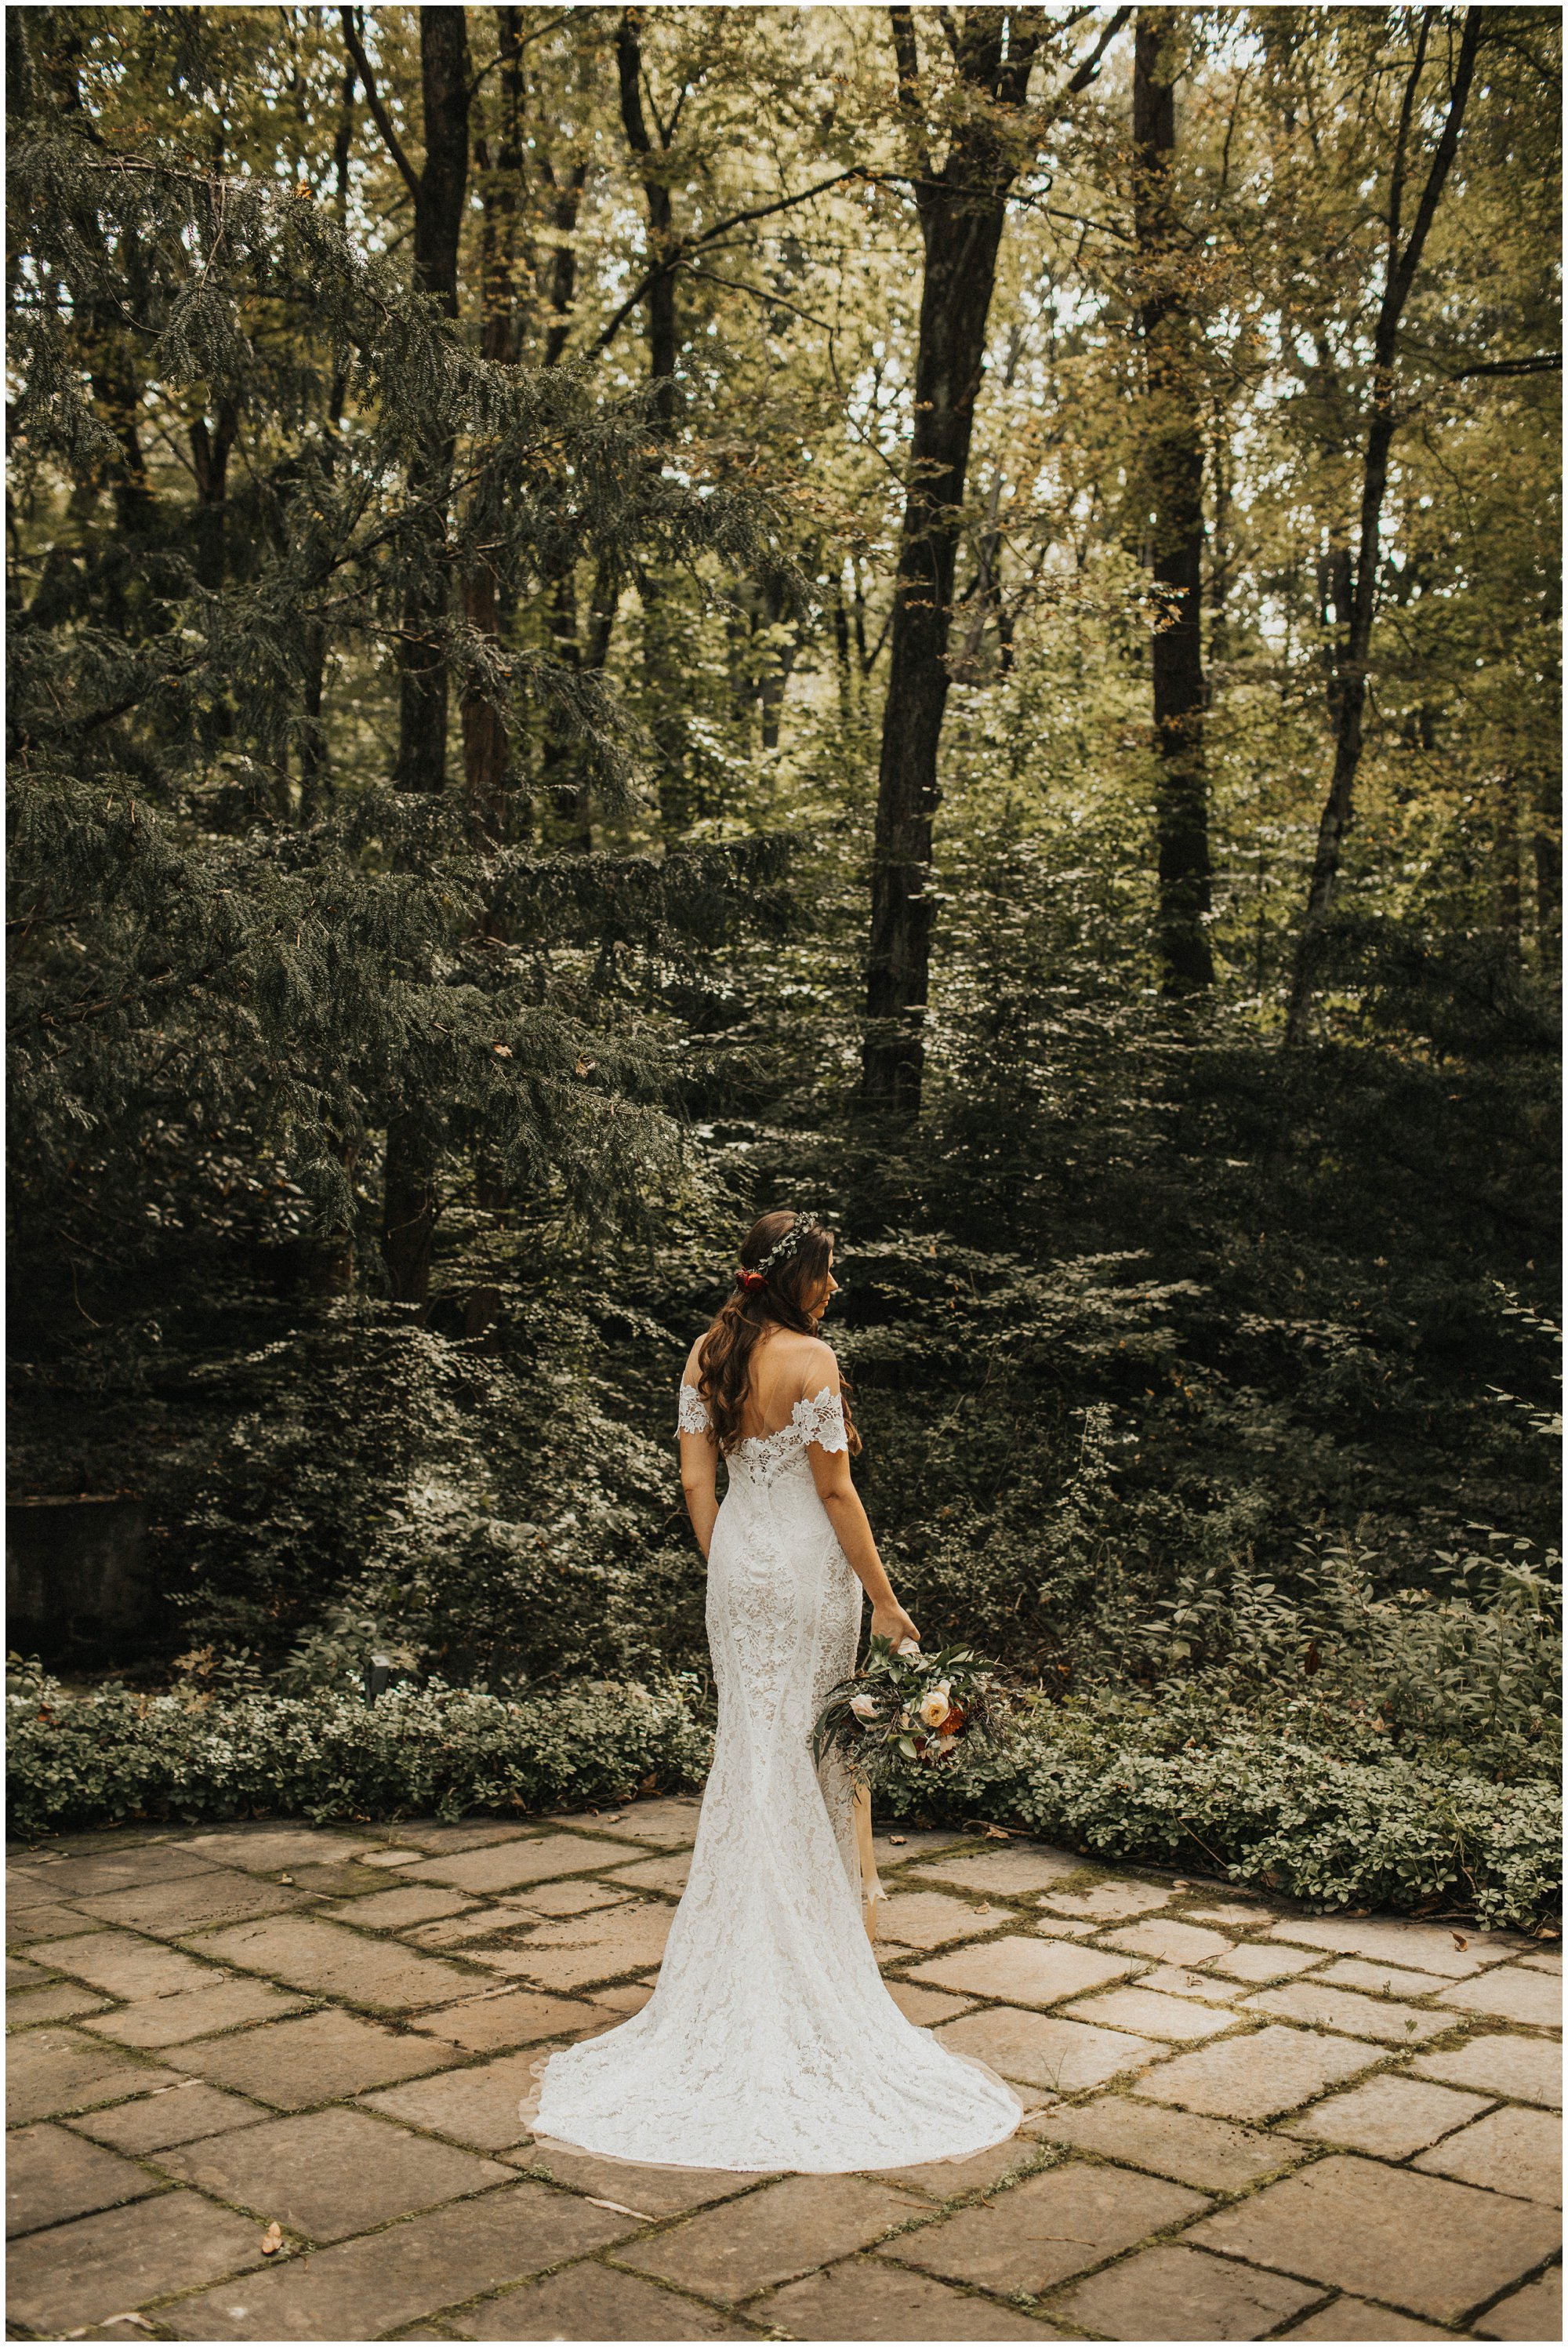 Holly Hedge Estate Wedding Photographer & videographer